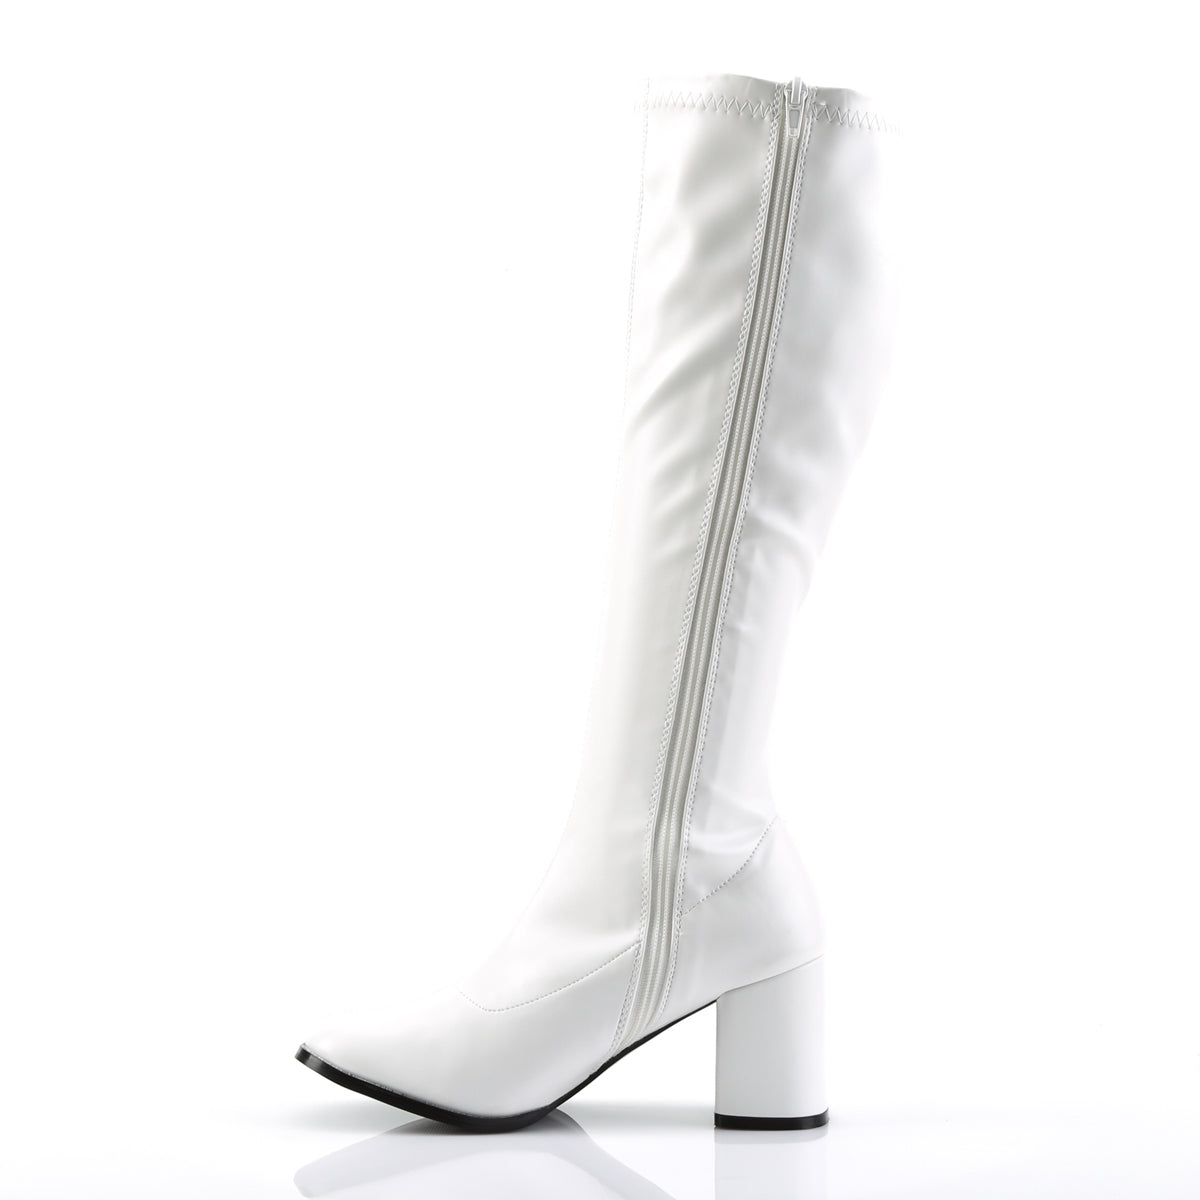 GOGO-300 3 Inch Heel White Women's Boots Funtasma Costume Shoes 